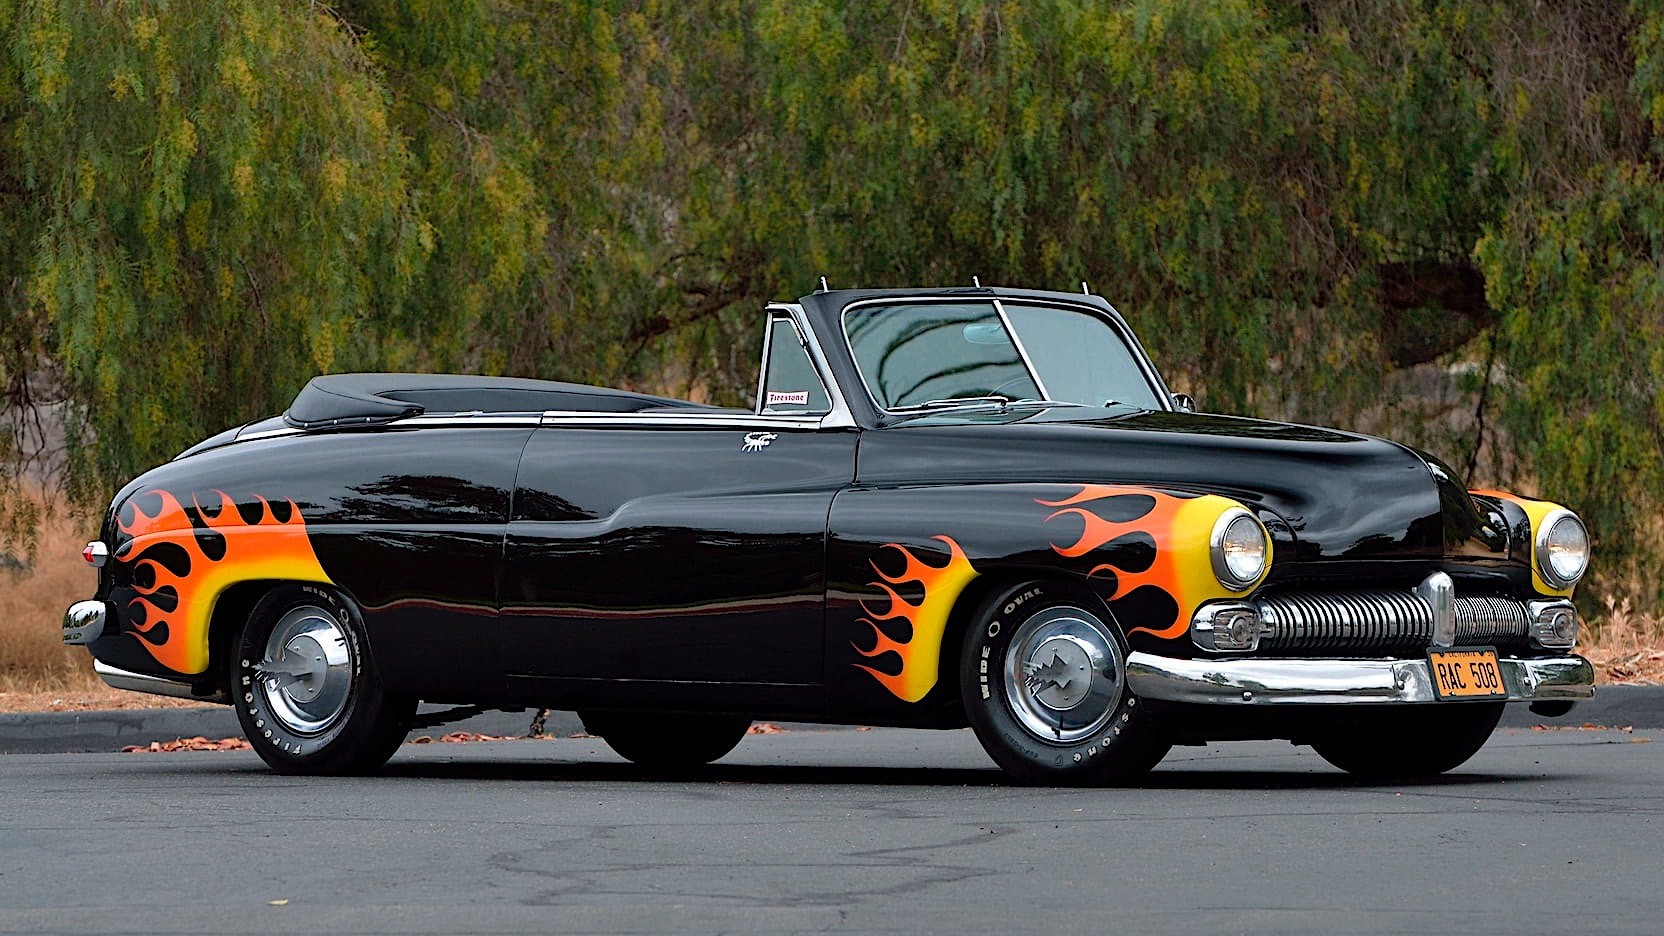 Weaponized 1949 Mercury Hells Chariot Shredded John Travoltas Ride